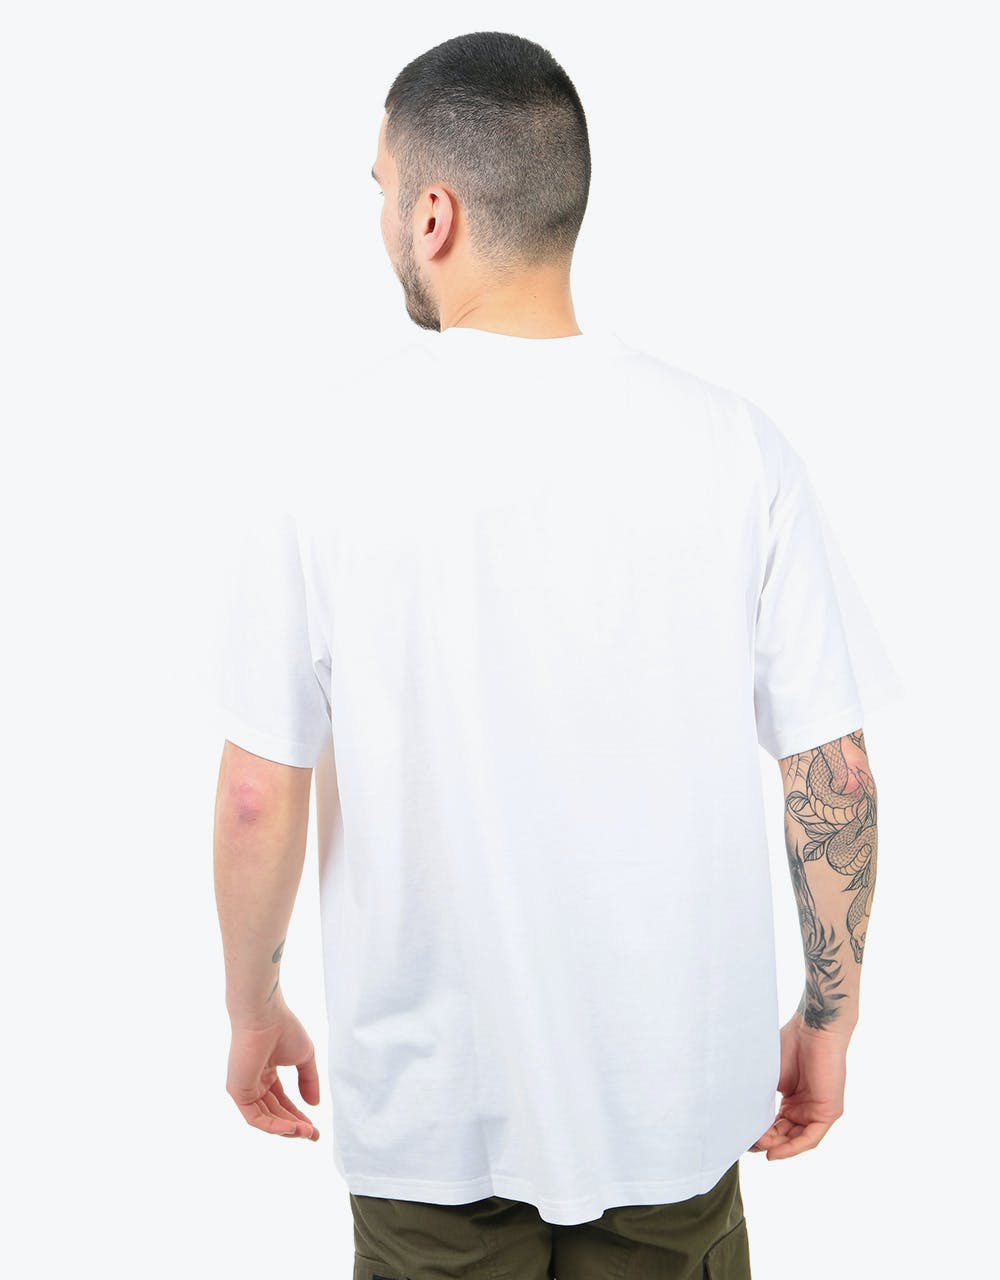 Carhartt WIP S/S Script Embroidery T-Shirt - White/Black